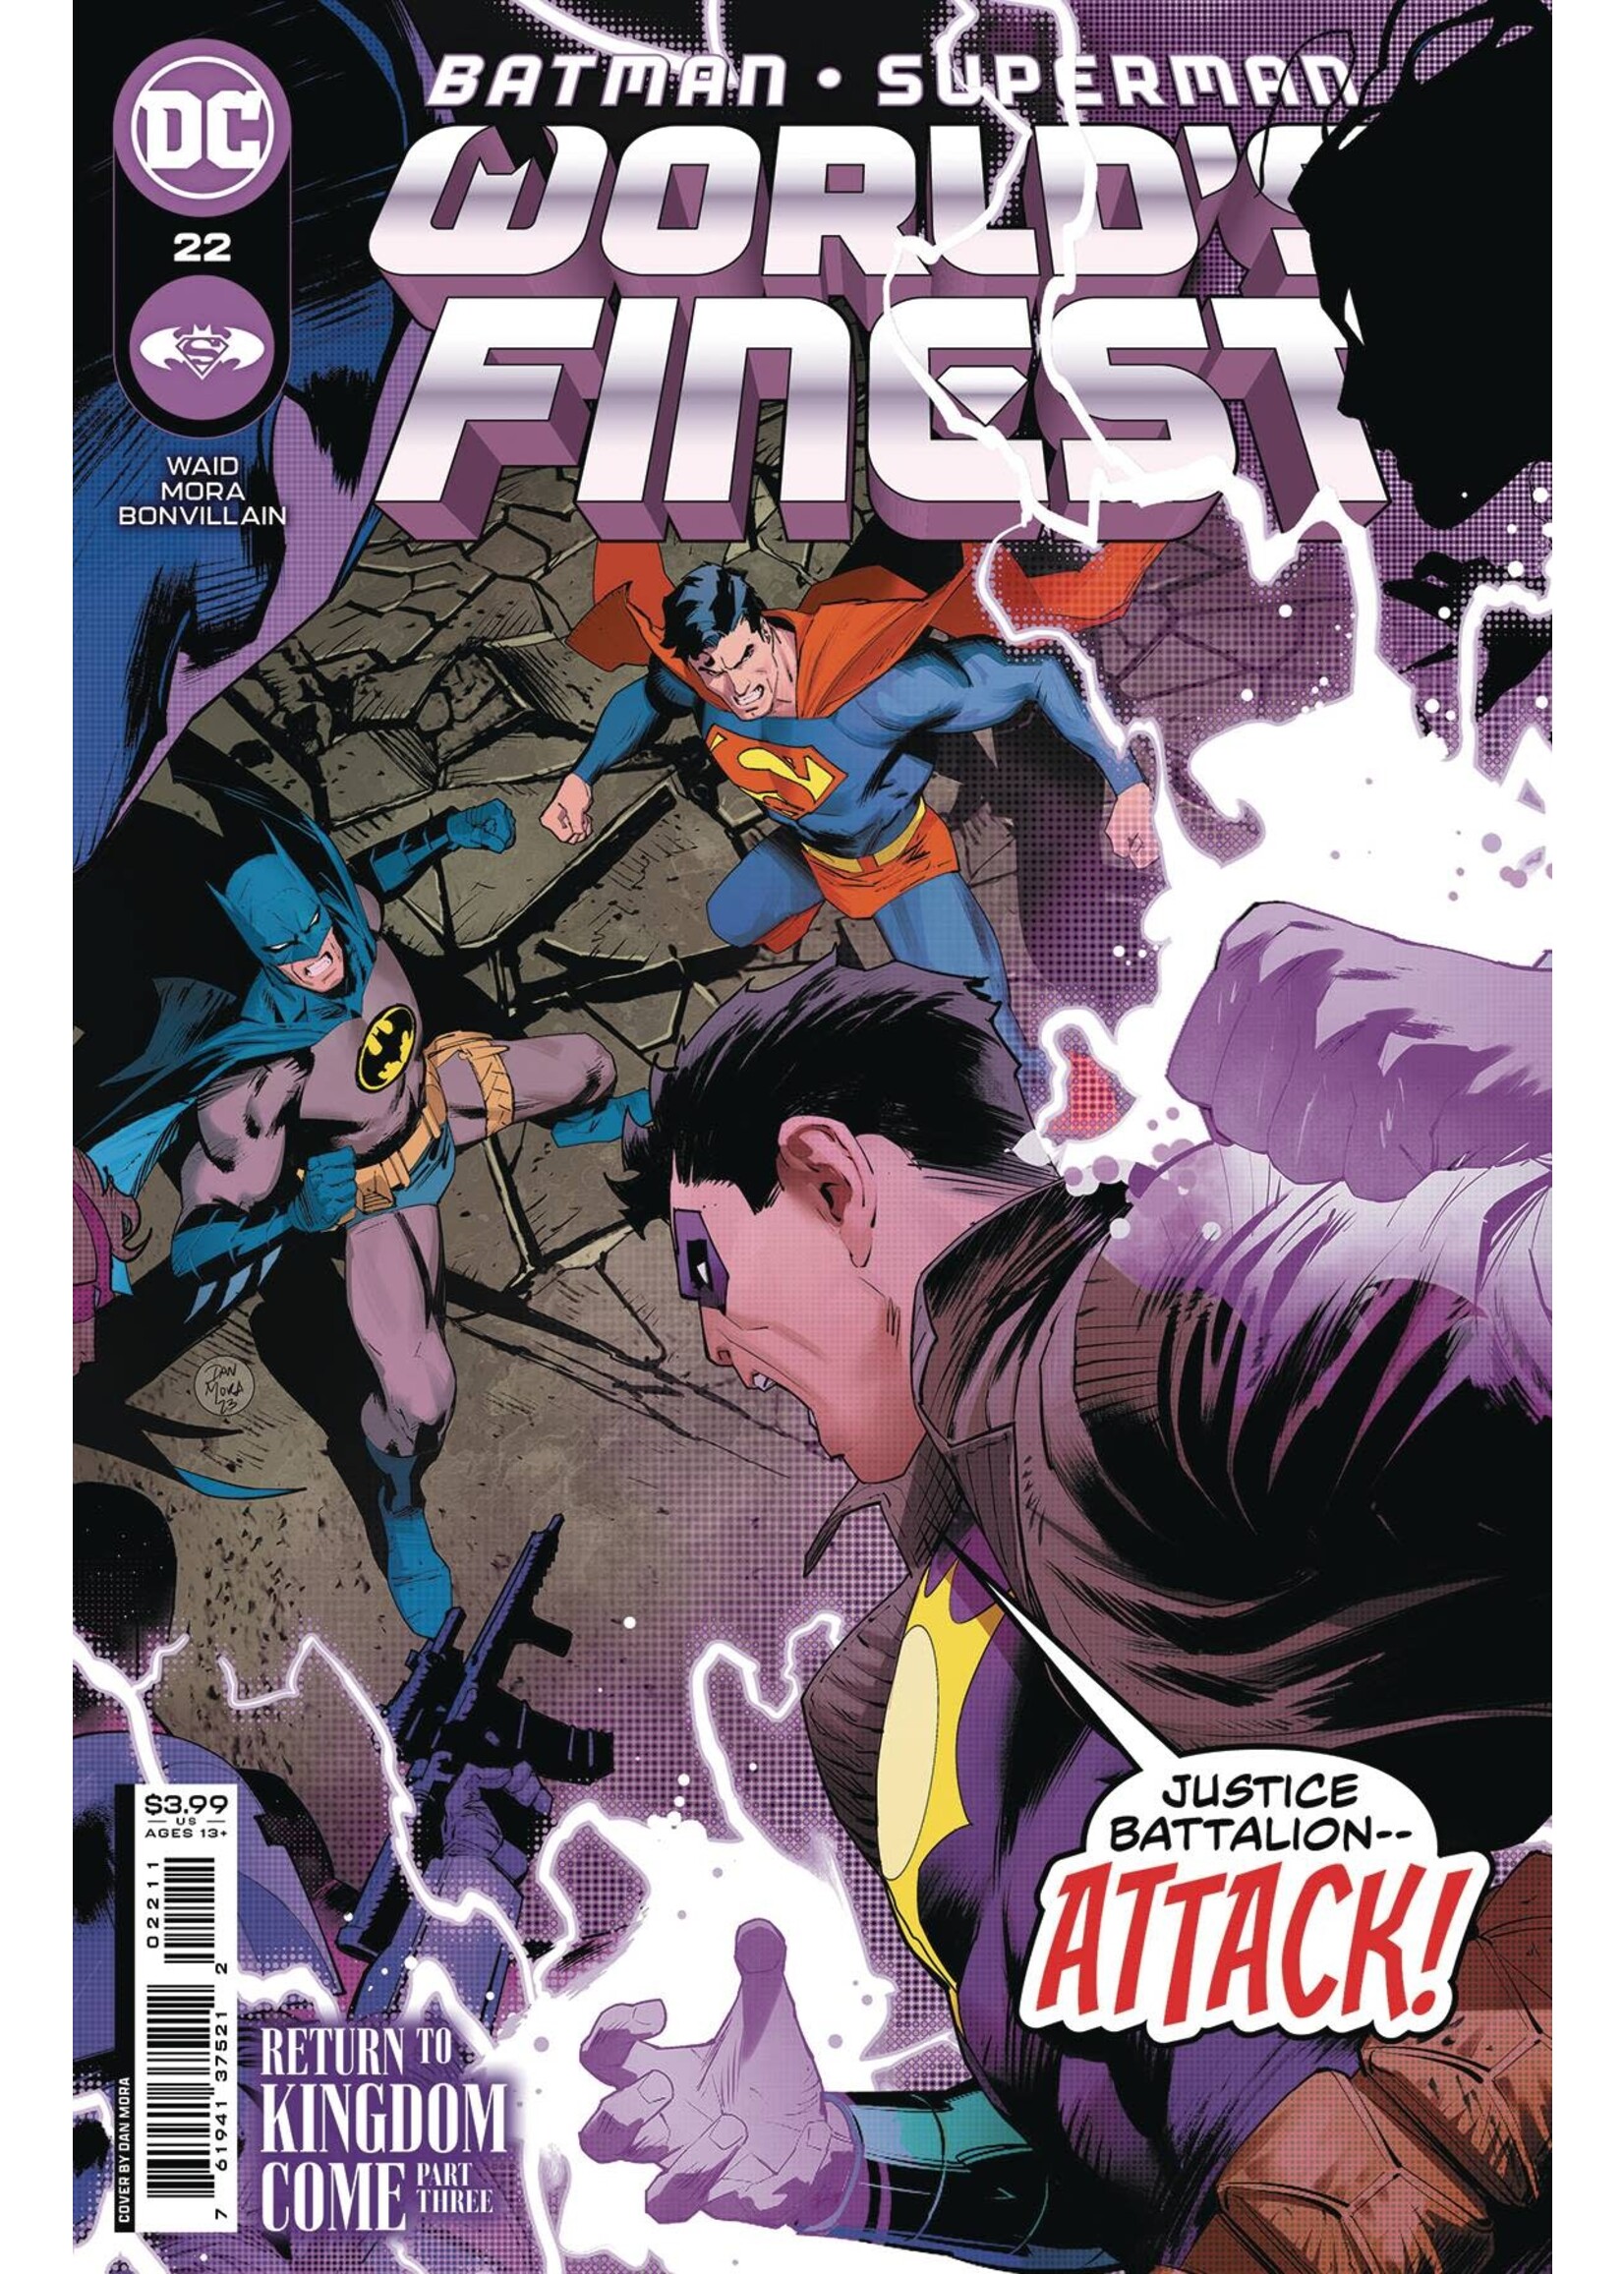 DC COMICS BATMAN/SUPERMAN WORLD'S FINEST #22